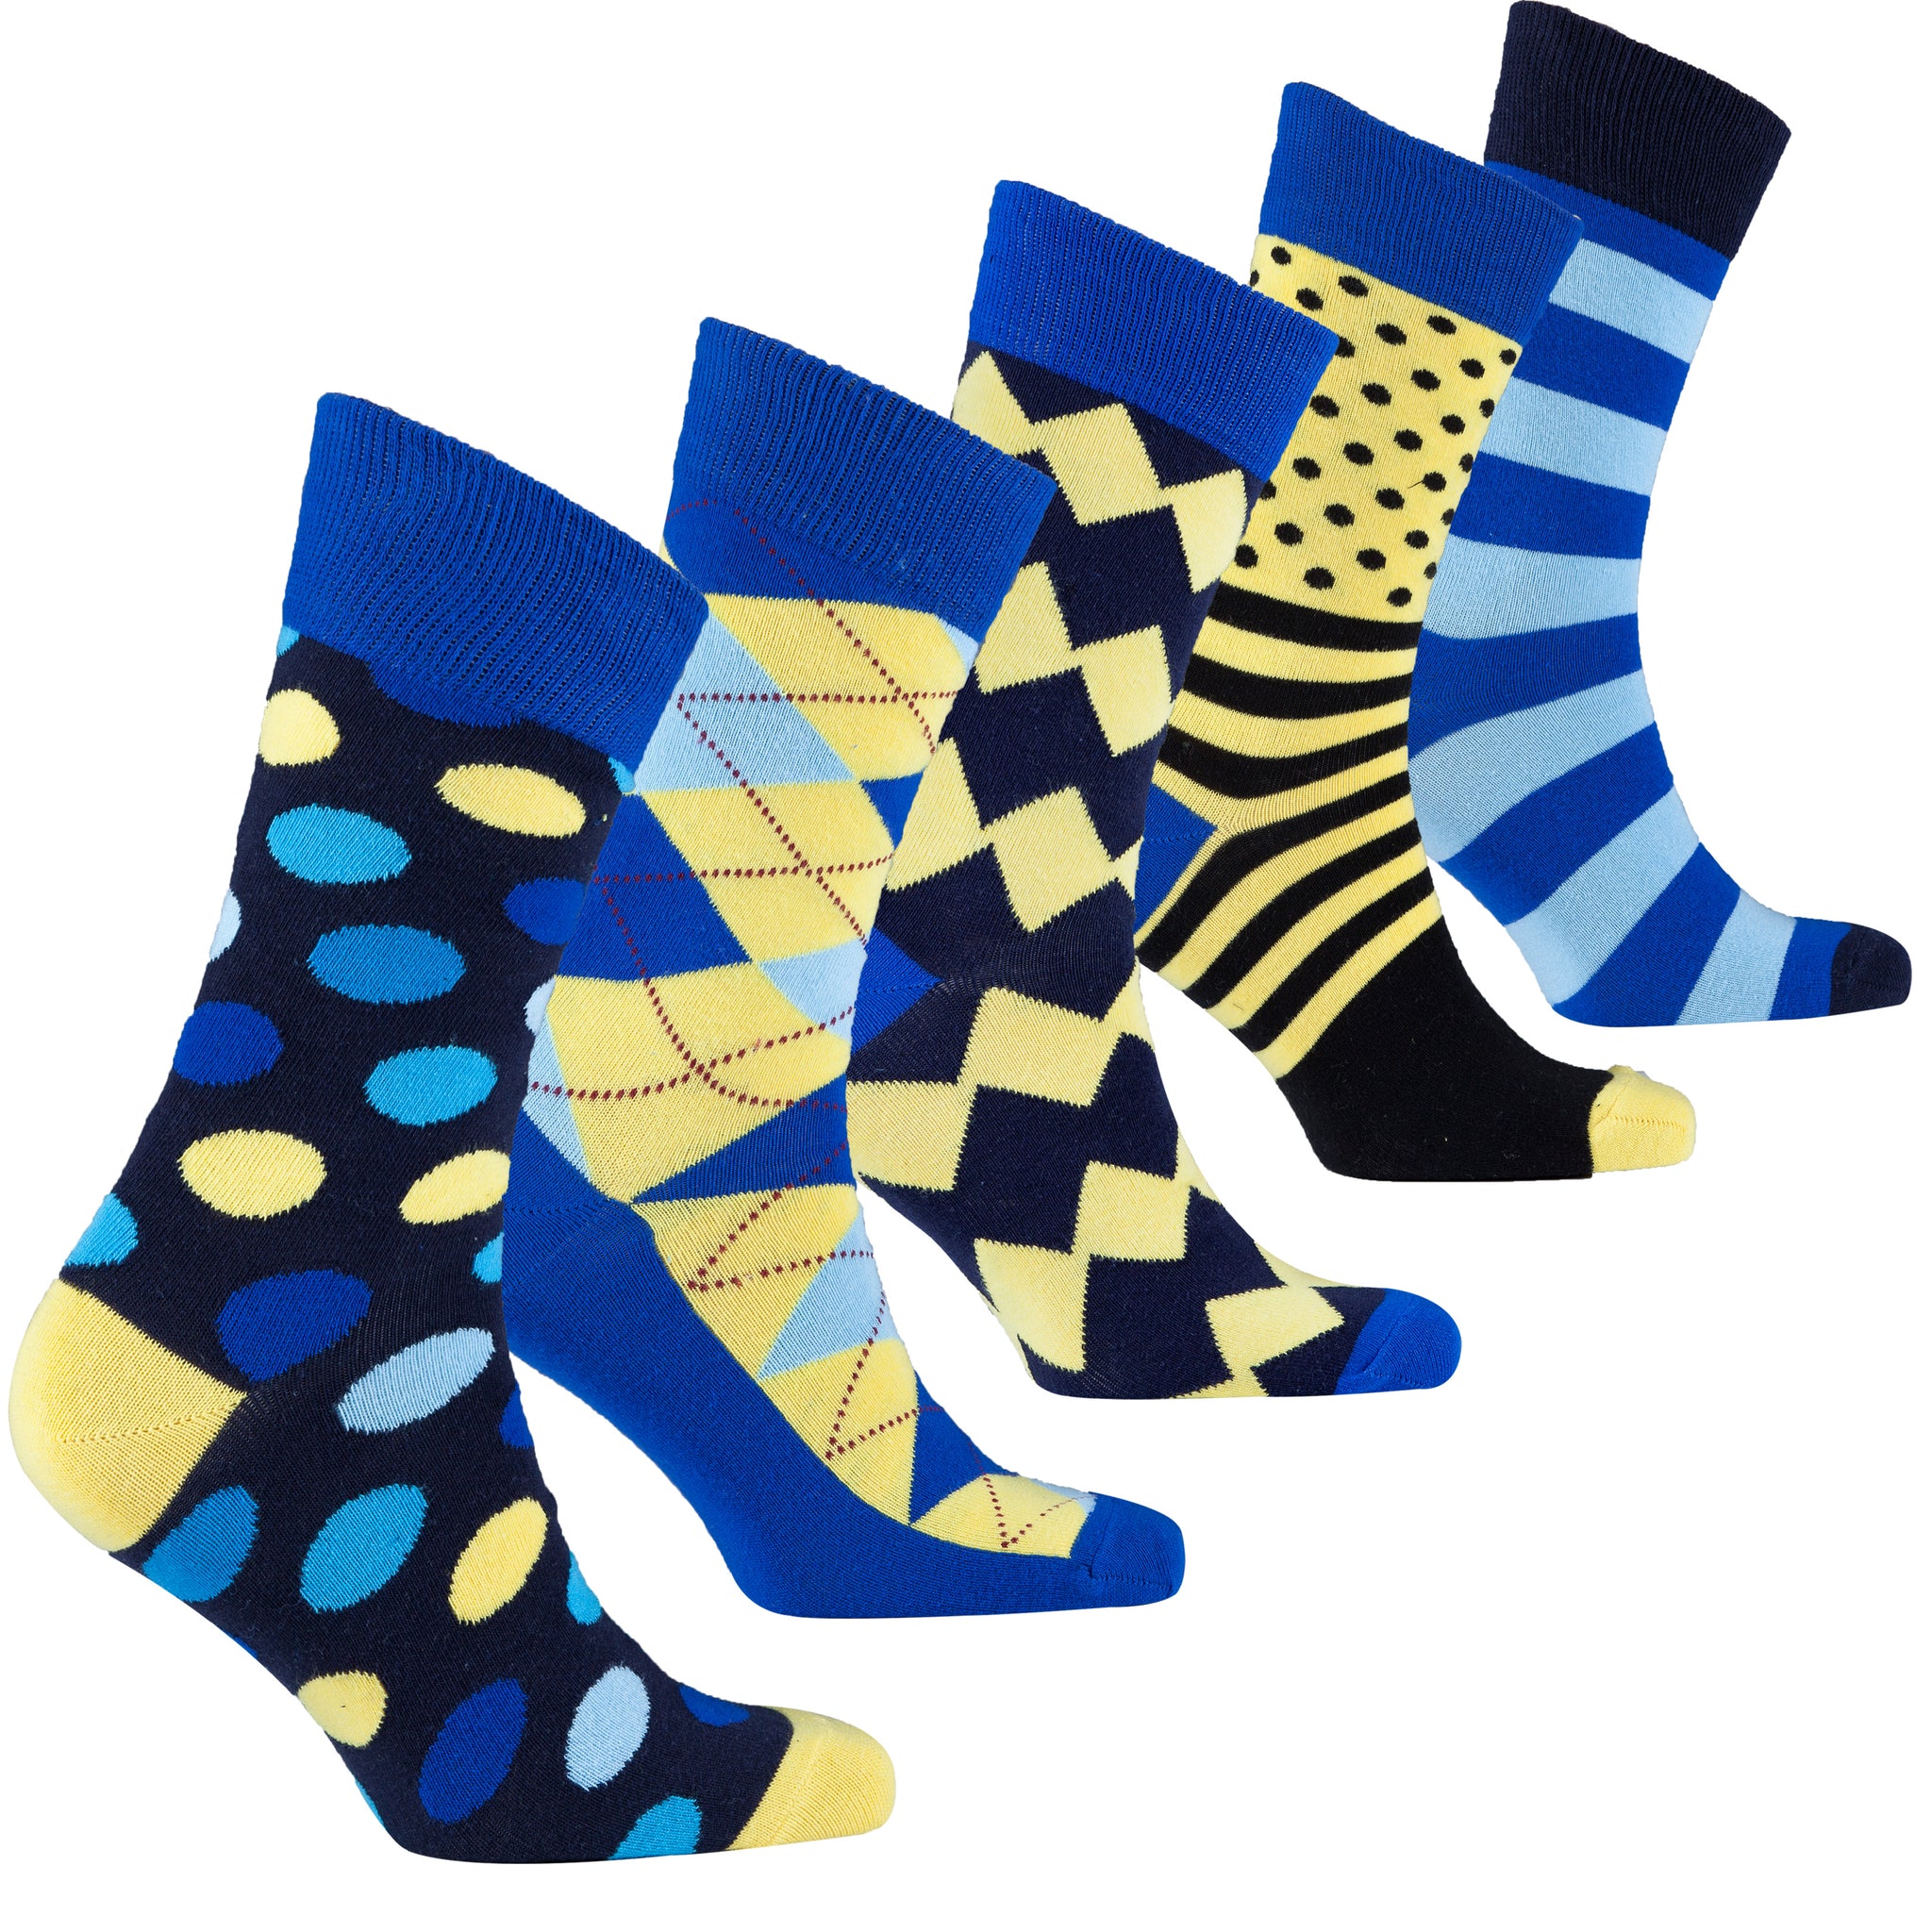 Men's Canary Mix Set Socks